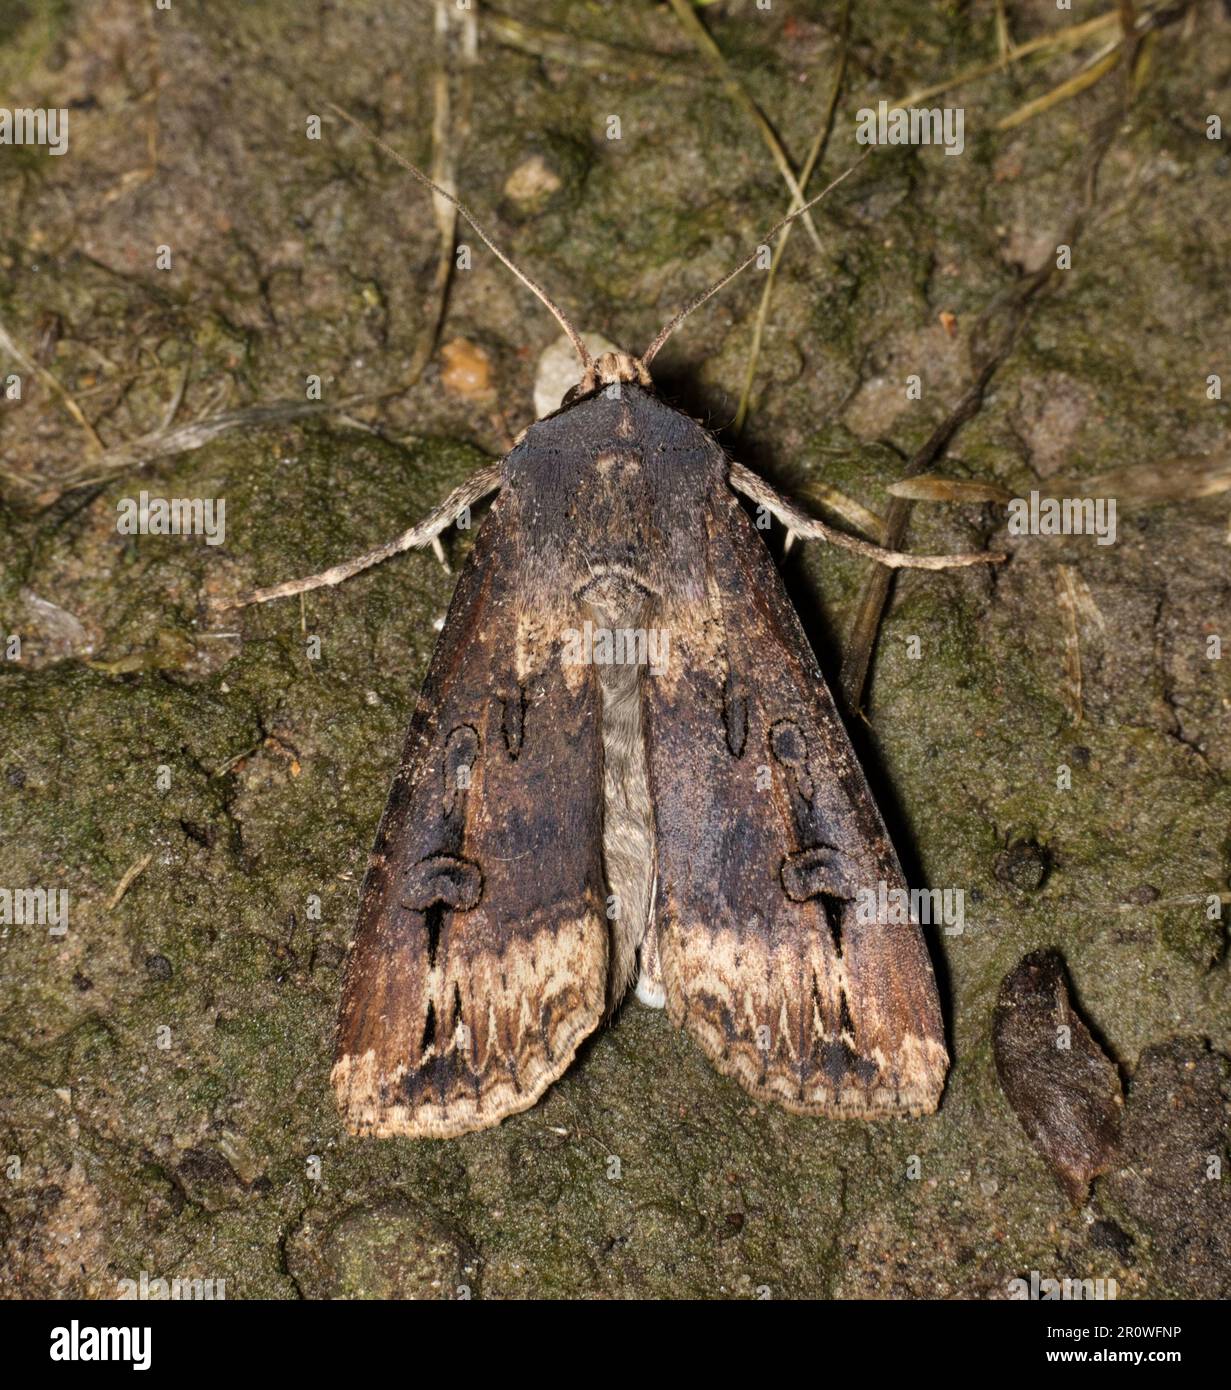 Black Cutworm Moth (Agrotis ipsilon) roosting on the ground, dorsal ...